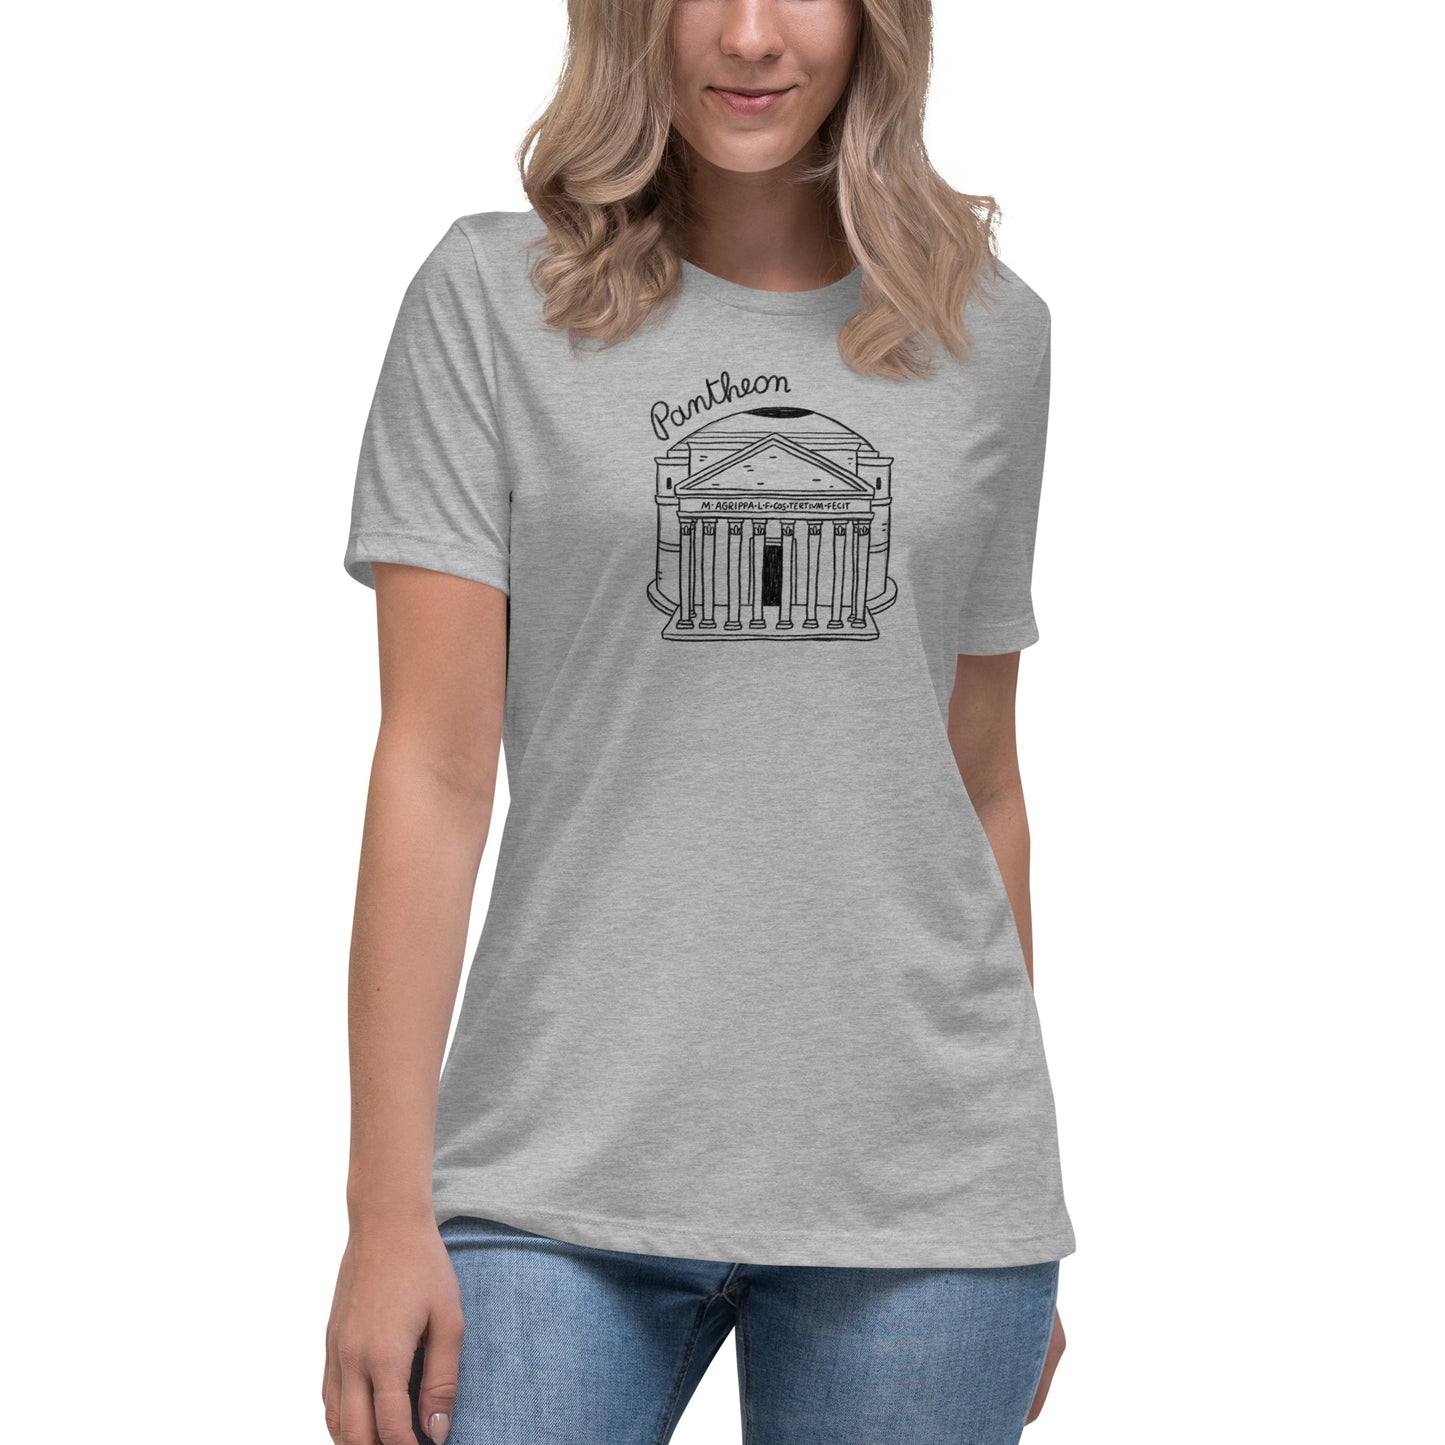 Pantheon on a Women's Relaxed T-Shirt